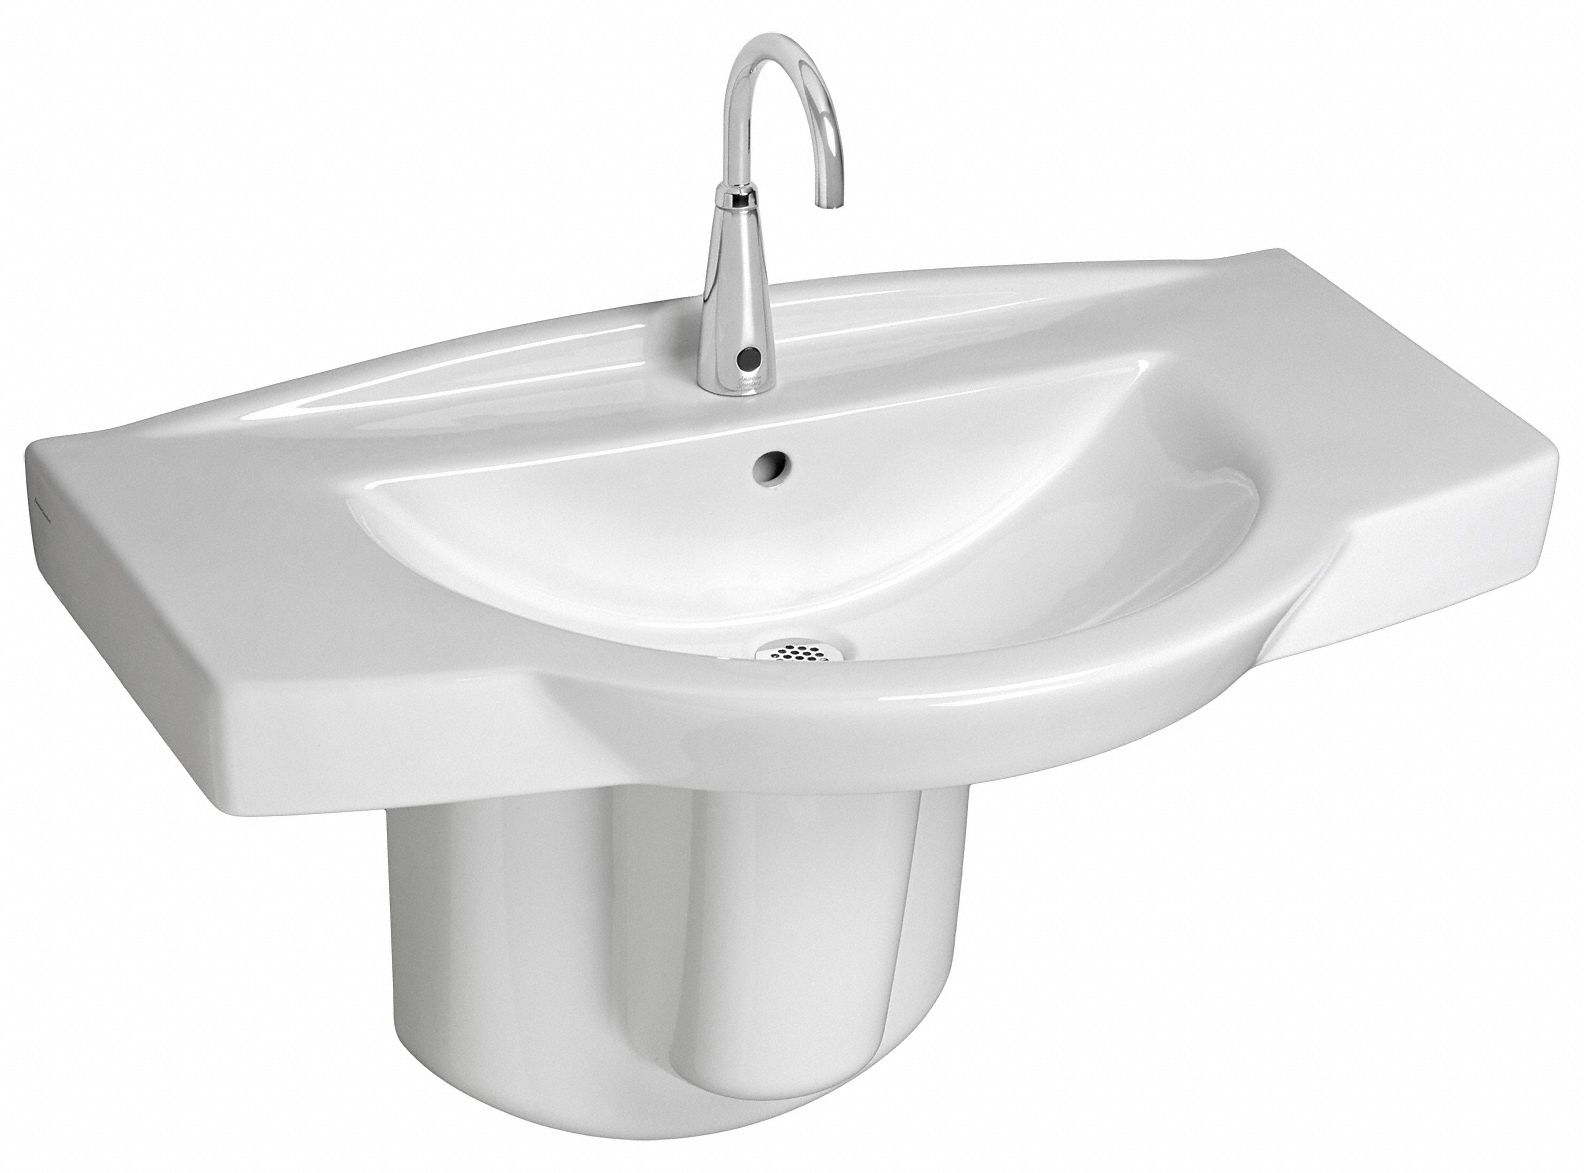 gooseneck high arc widespread bathroom sink faucet